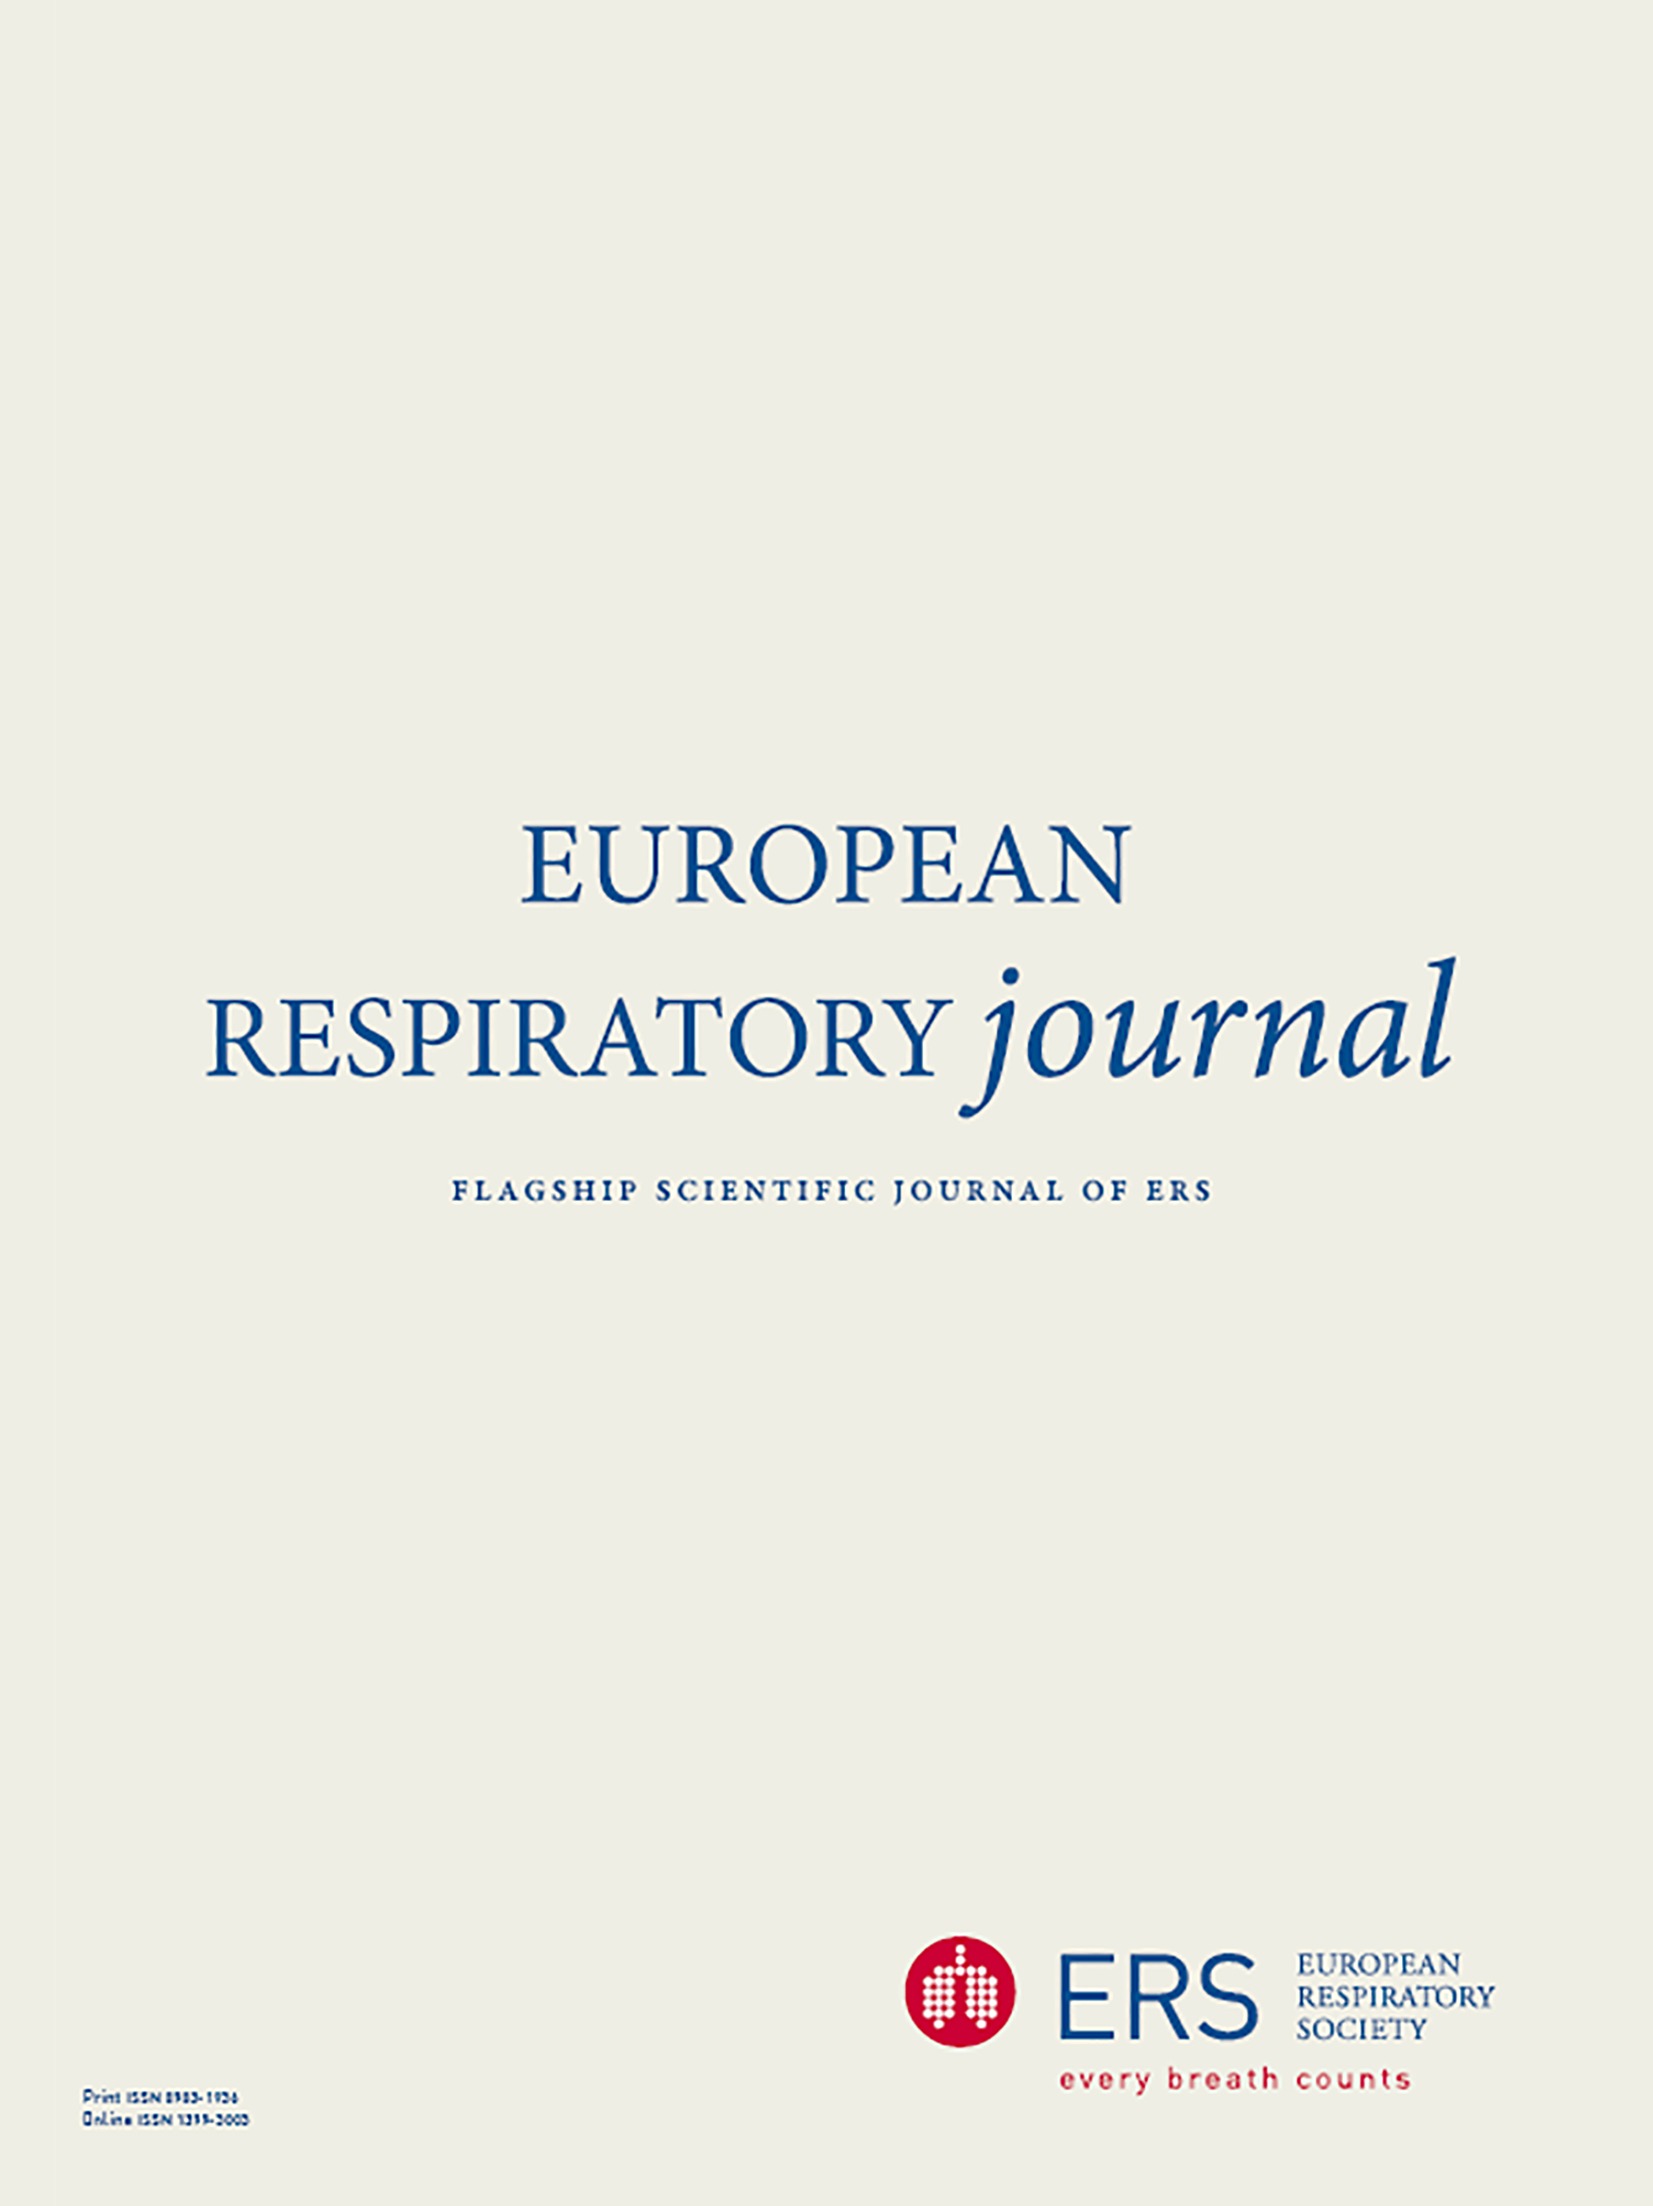 Asthma and incident coronary heart disease: an observational and Mendelian randomisation study